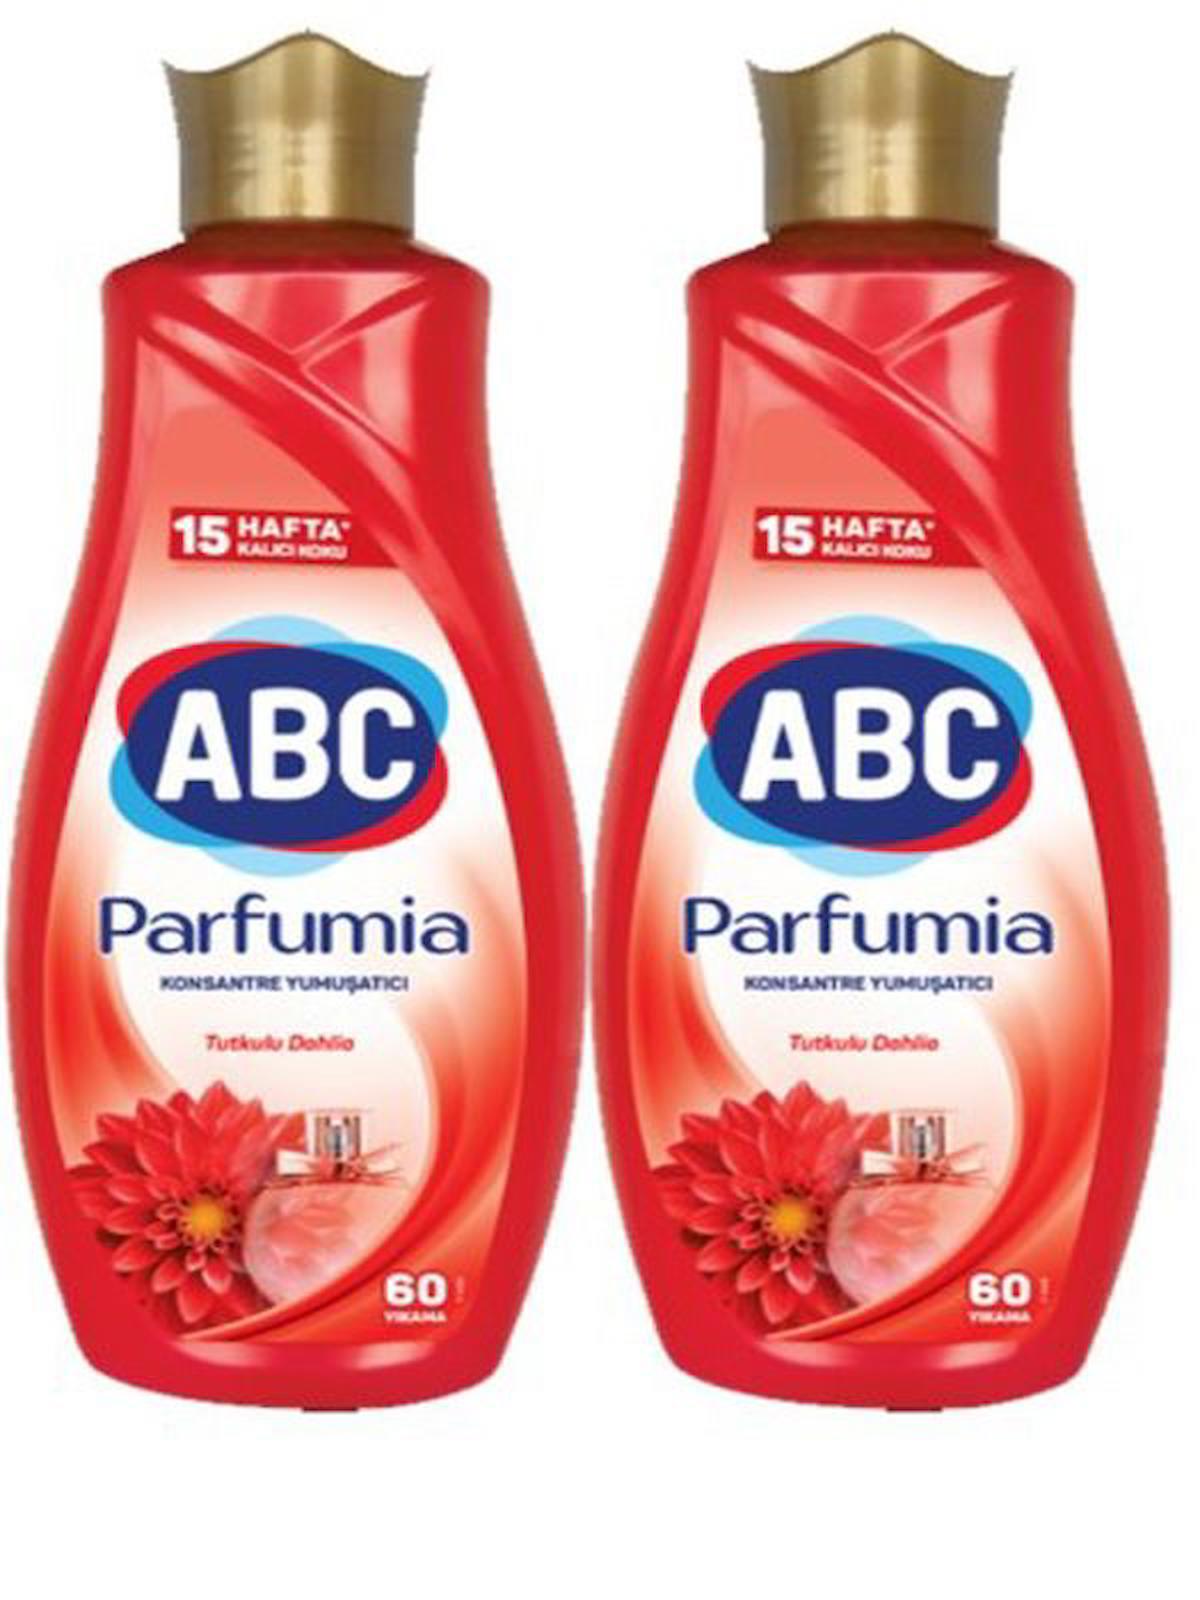 ABC Parfumia Konsantre 60 Yıkama Yumuşatıcı 2 x 1.44 lt